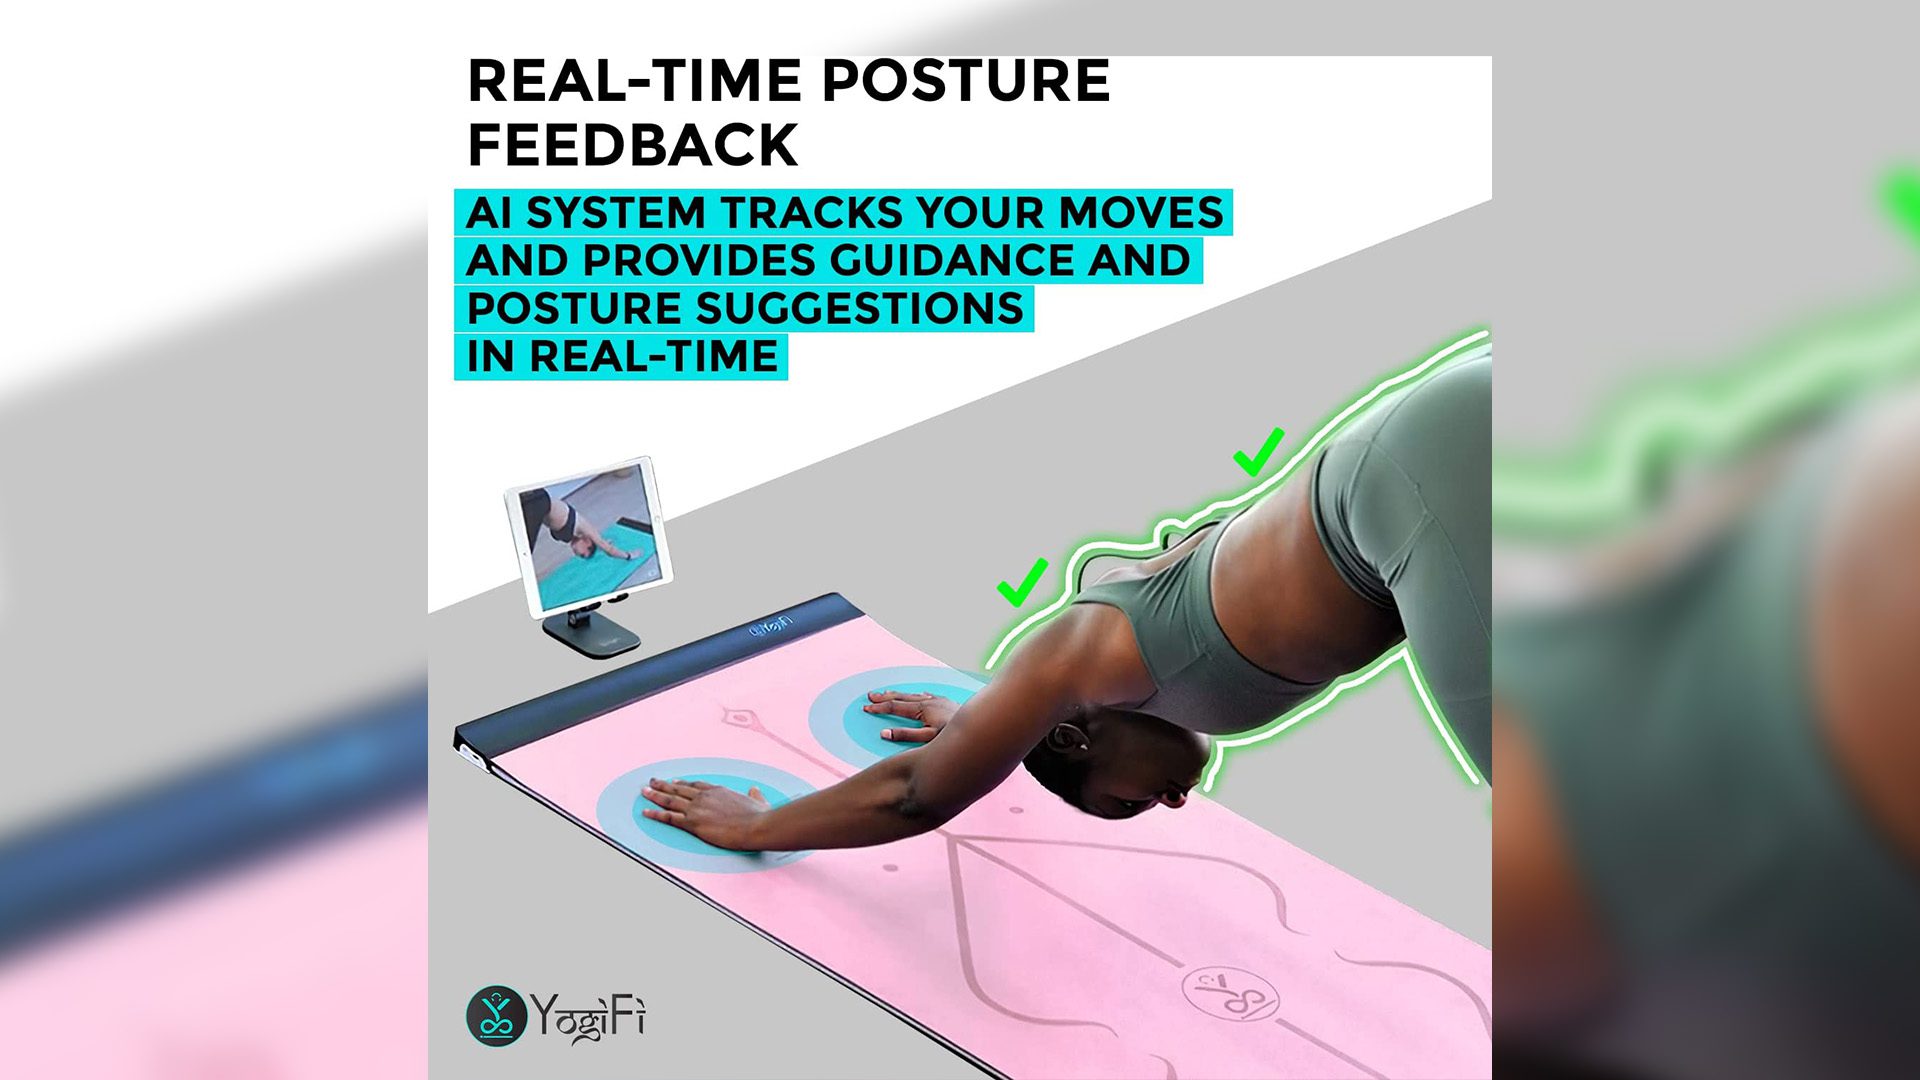 YogiFi's innovative holiday gift of an AI-powered yoga mat